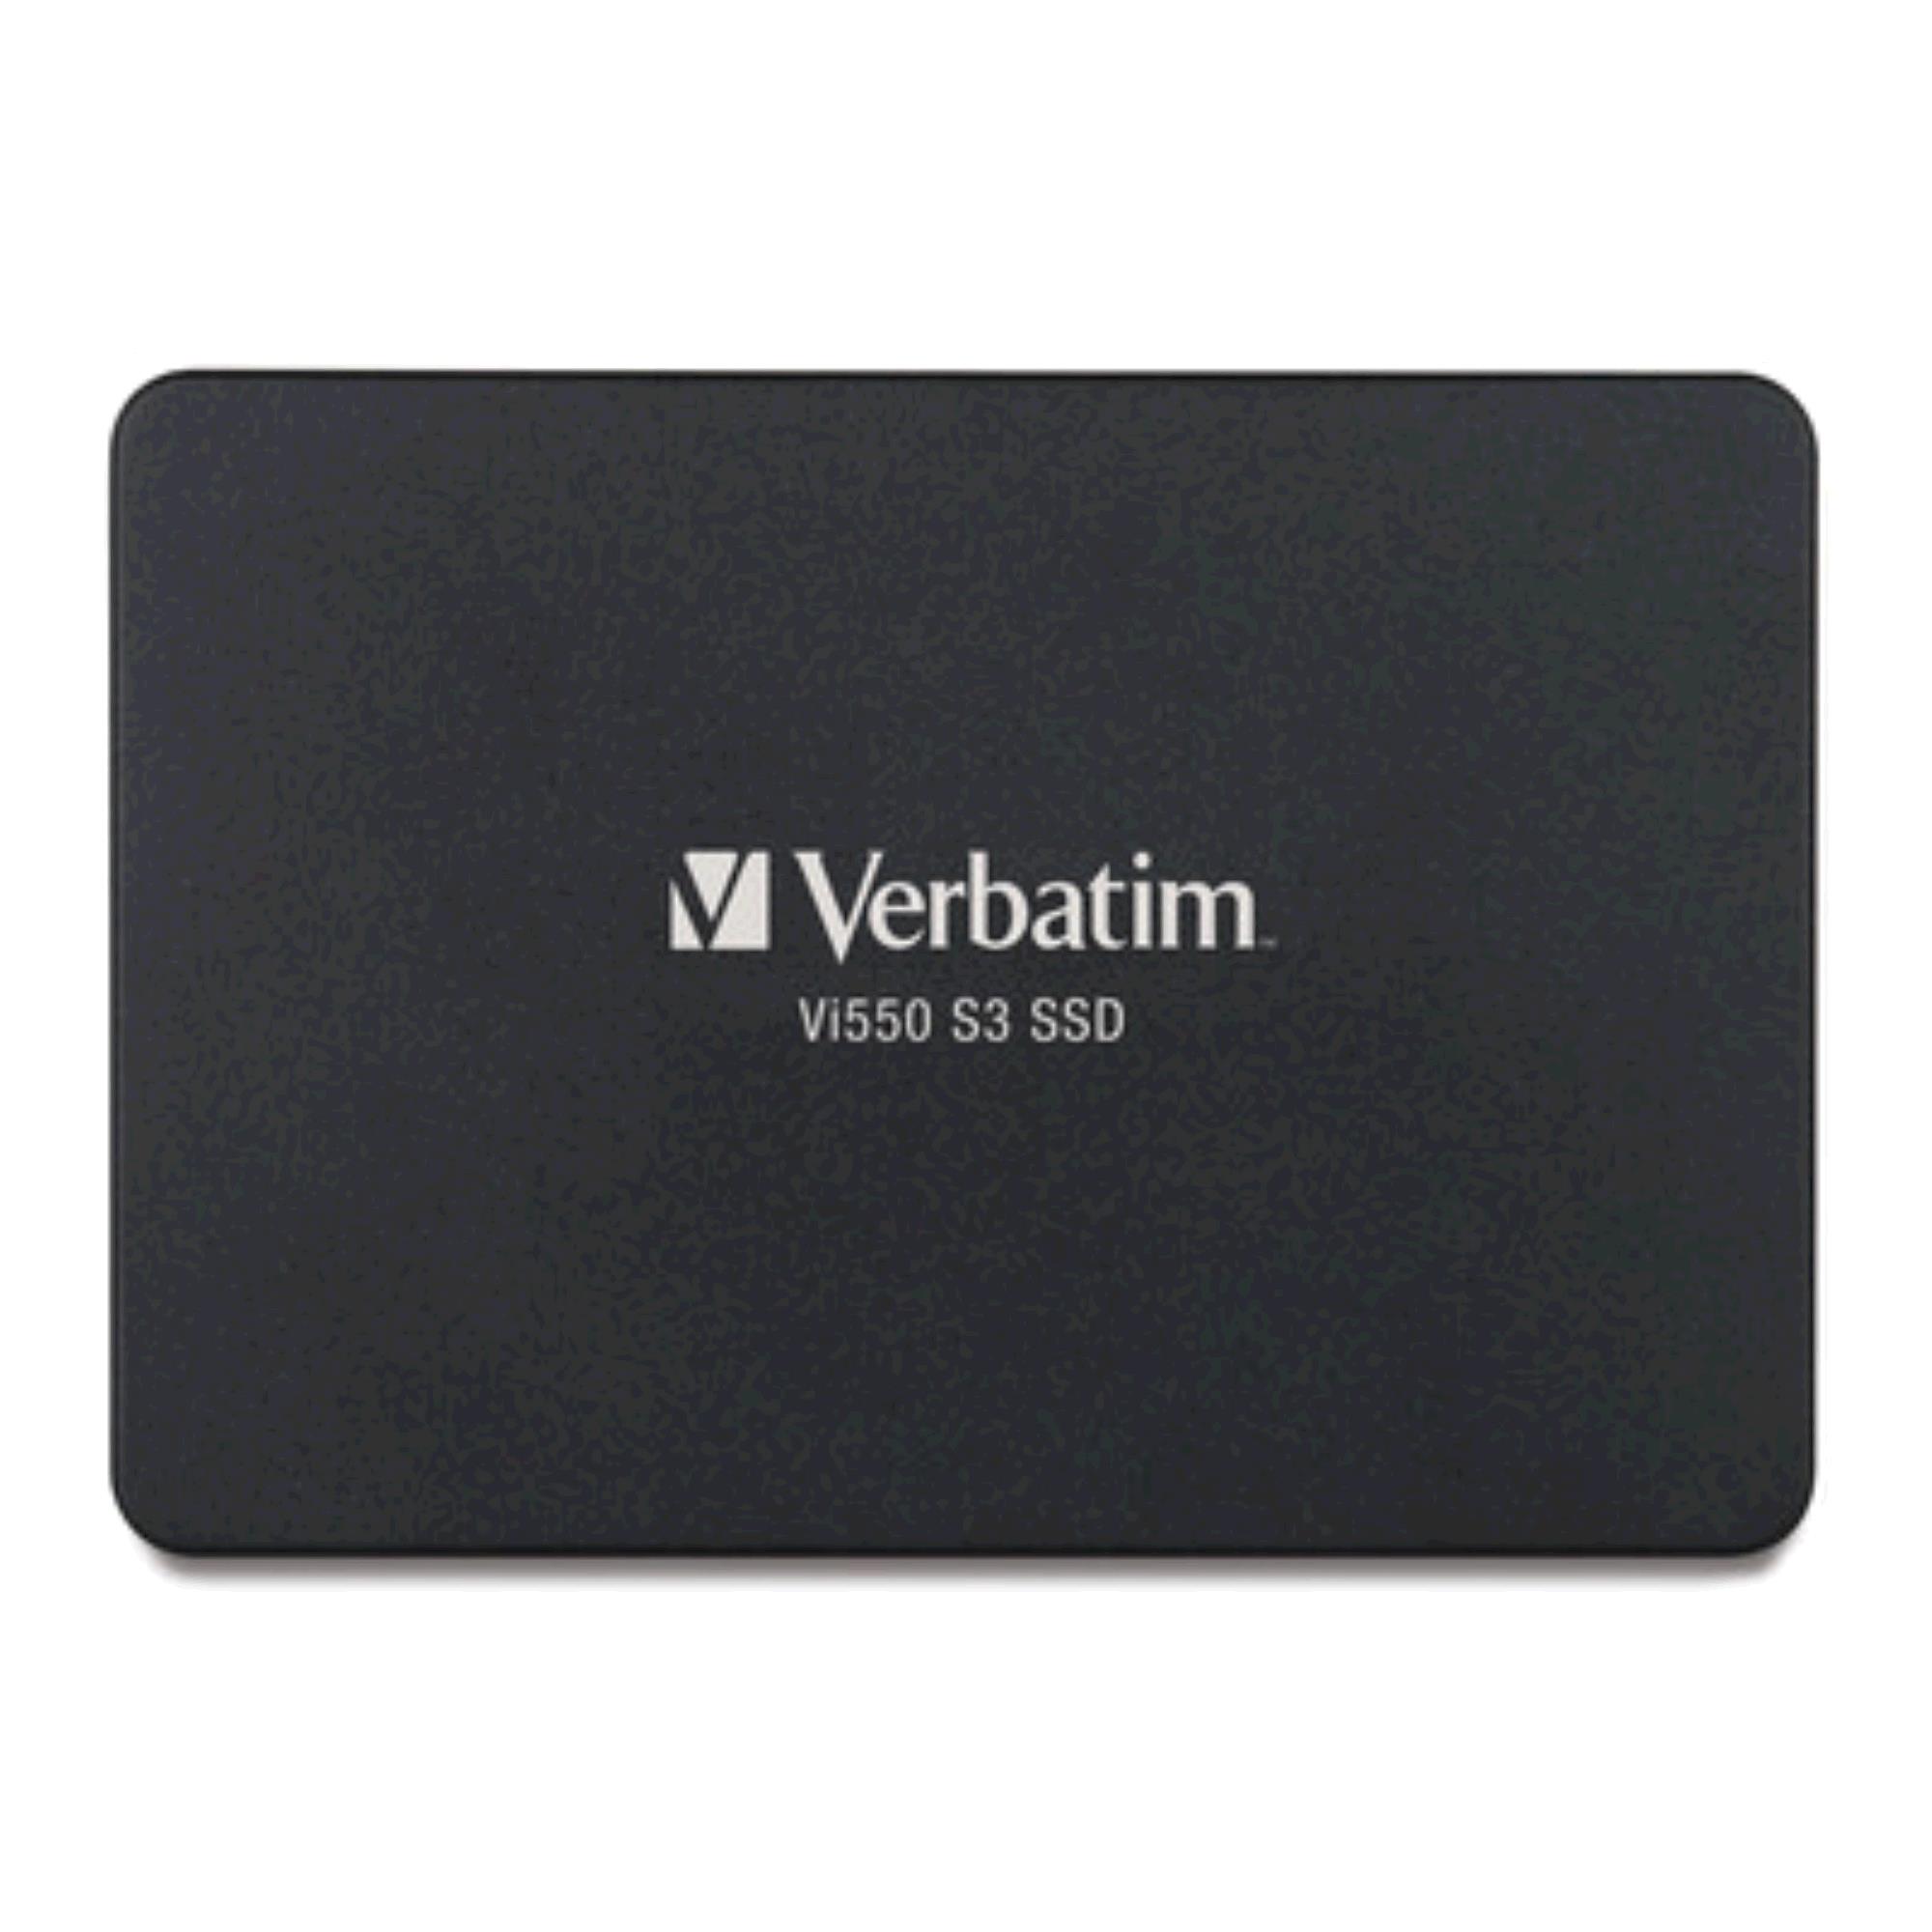 Verbatim SSD Vi550 S3 128GB